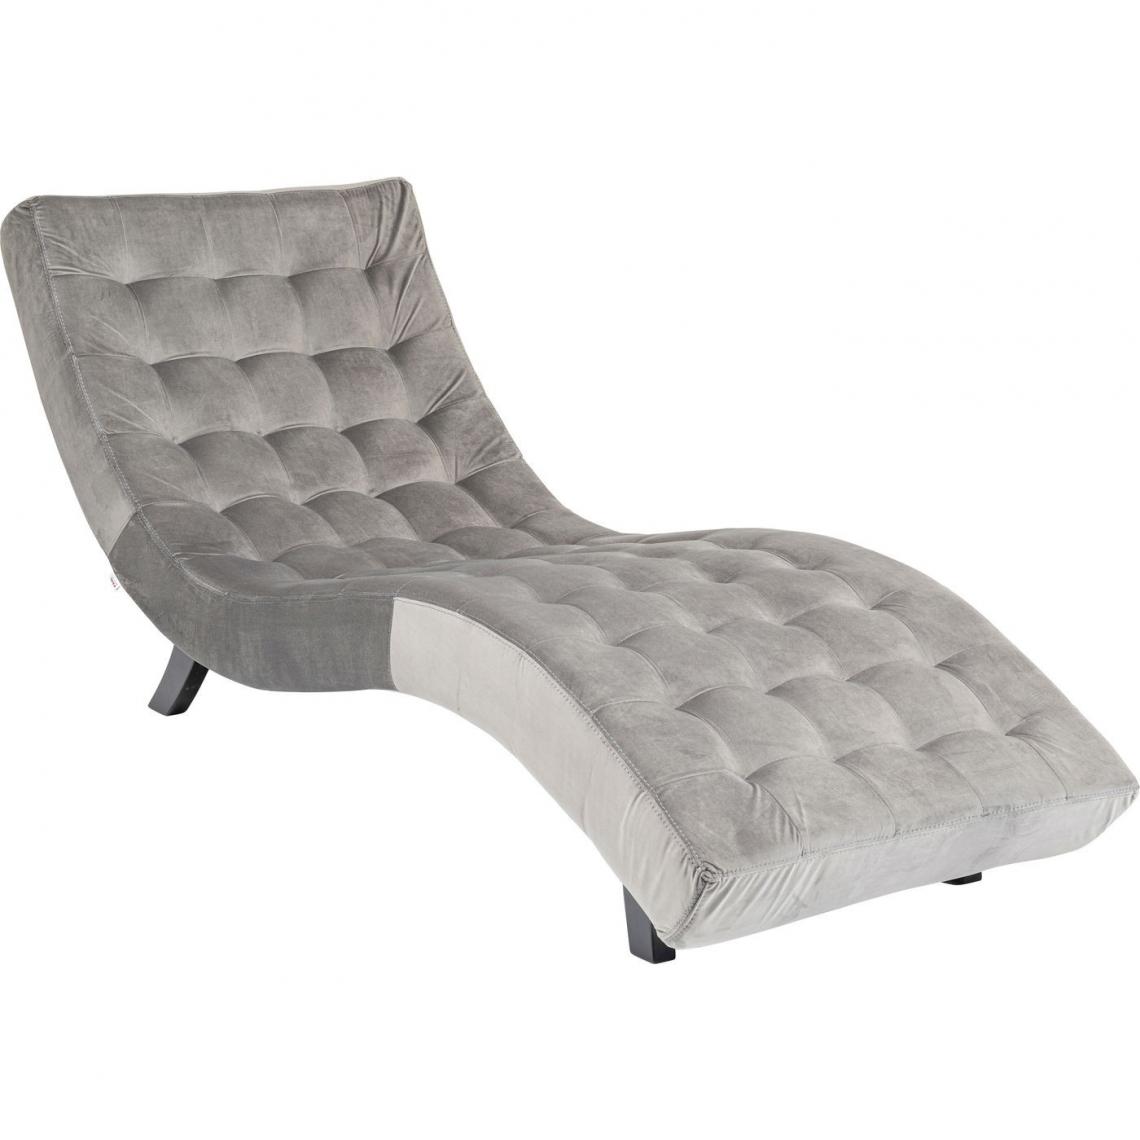 Karedesign - Chaise longue Snake velours gris Kare Design - Transats, chaises longues